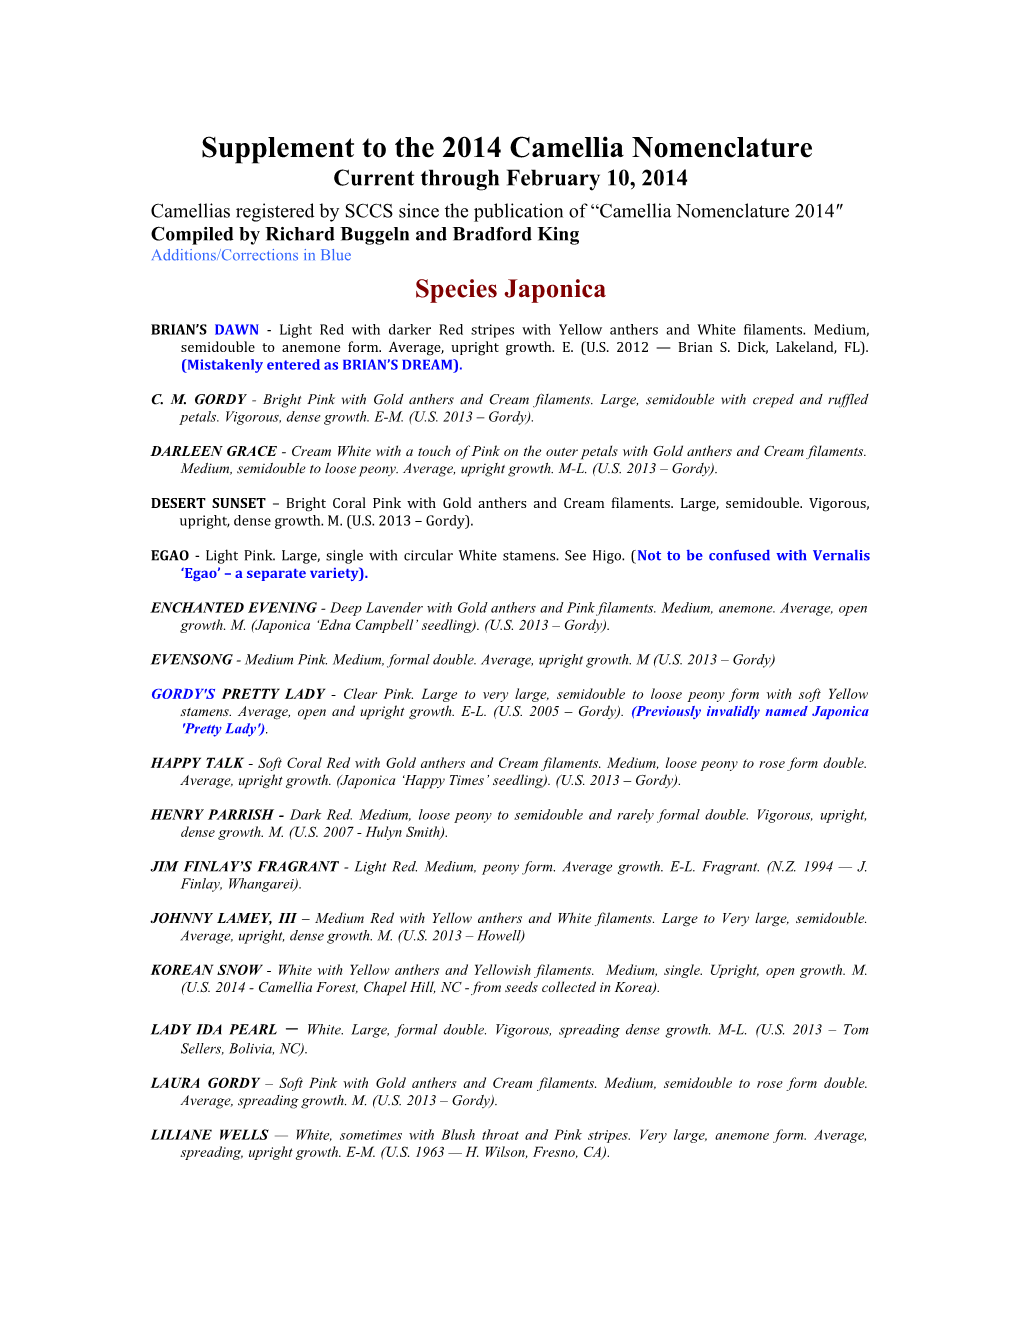 Supplement to the 2014 Camellia Nomenclature Current Through February 10, 2014